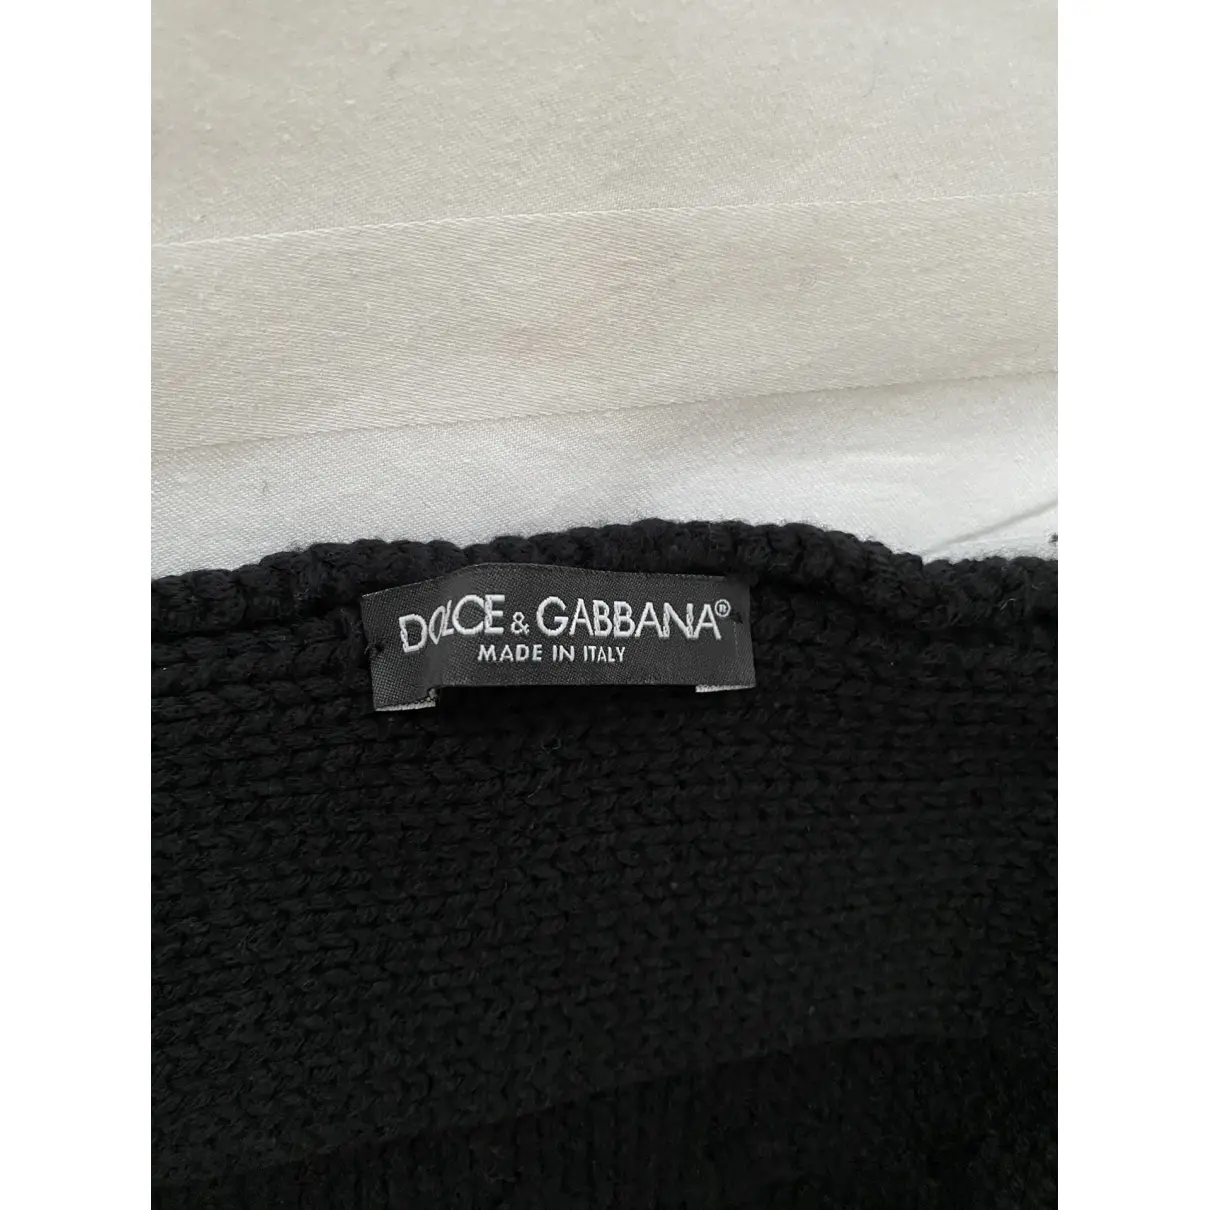 Buy Dolce & Gabbana Wool scarf online